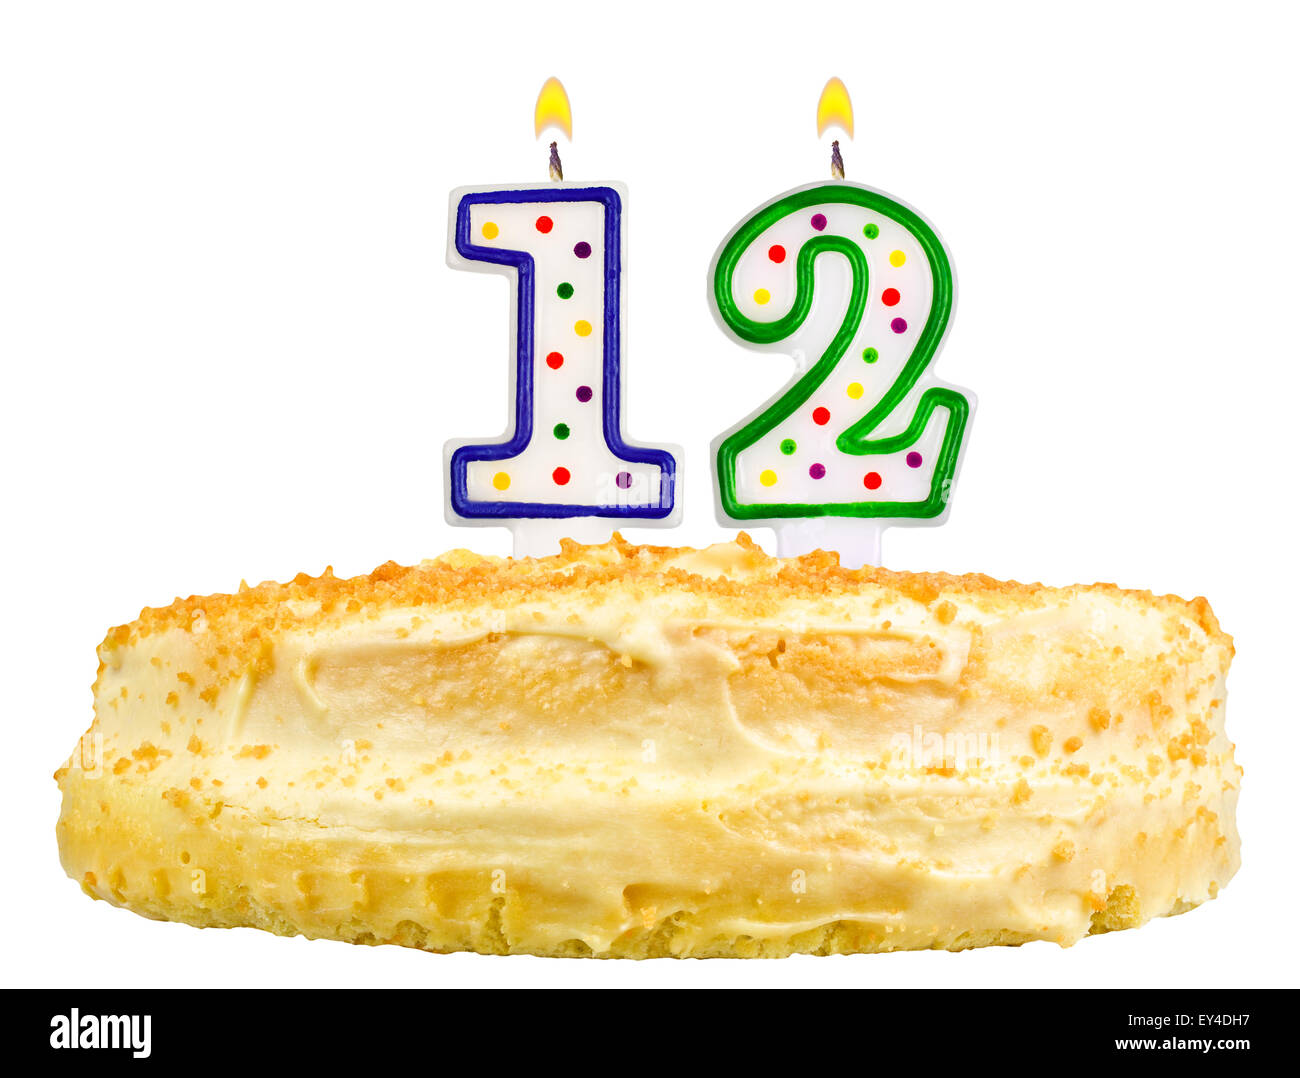 Тортик со свечками цифра 17